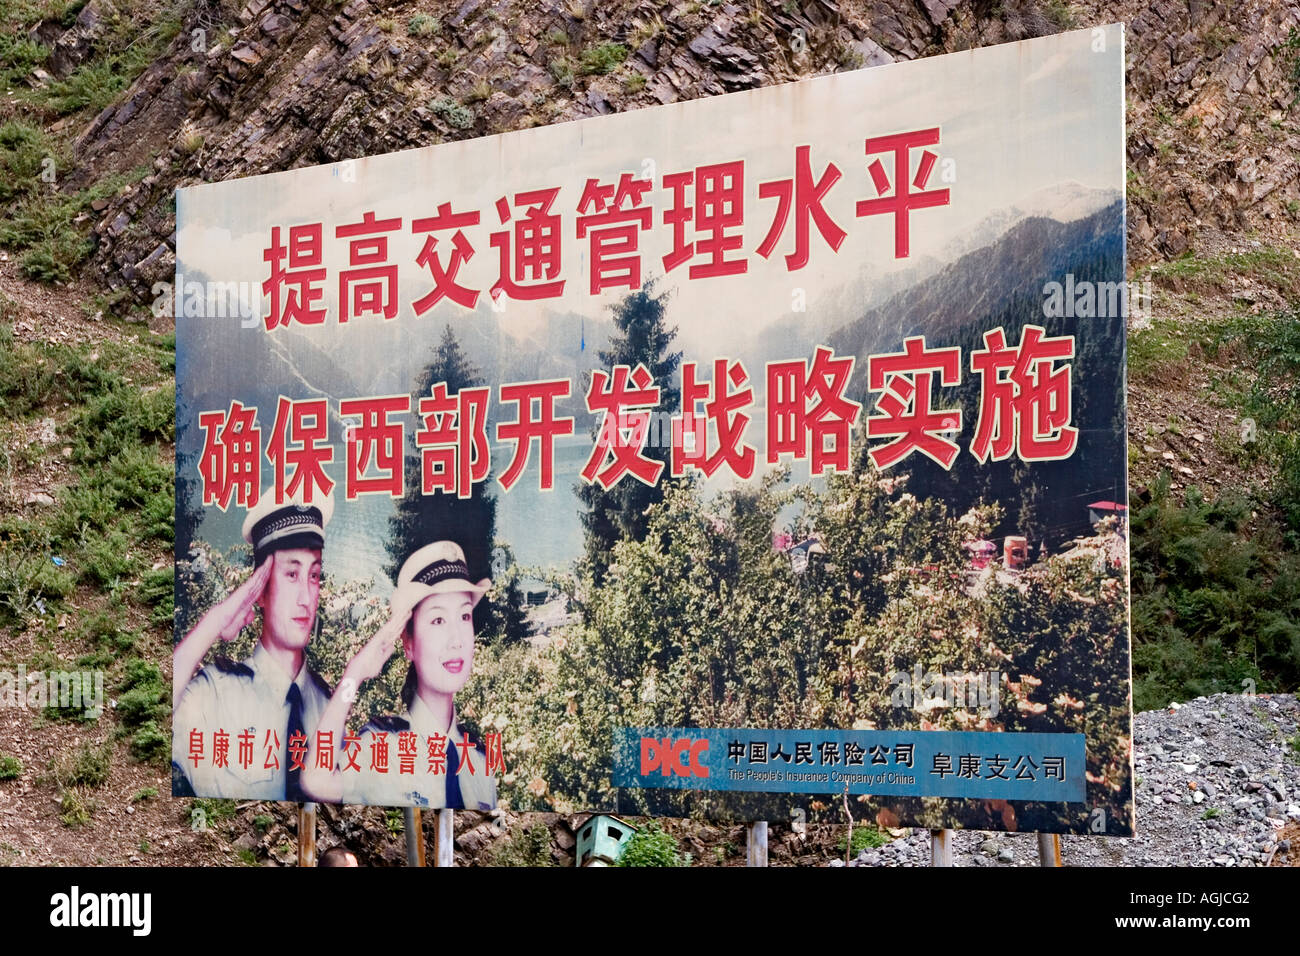 asia china billboard with saluting military near urumqi at silkroad Stock Photo